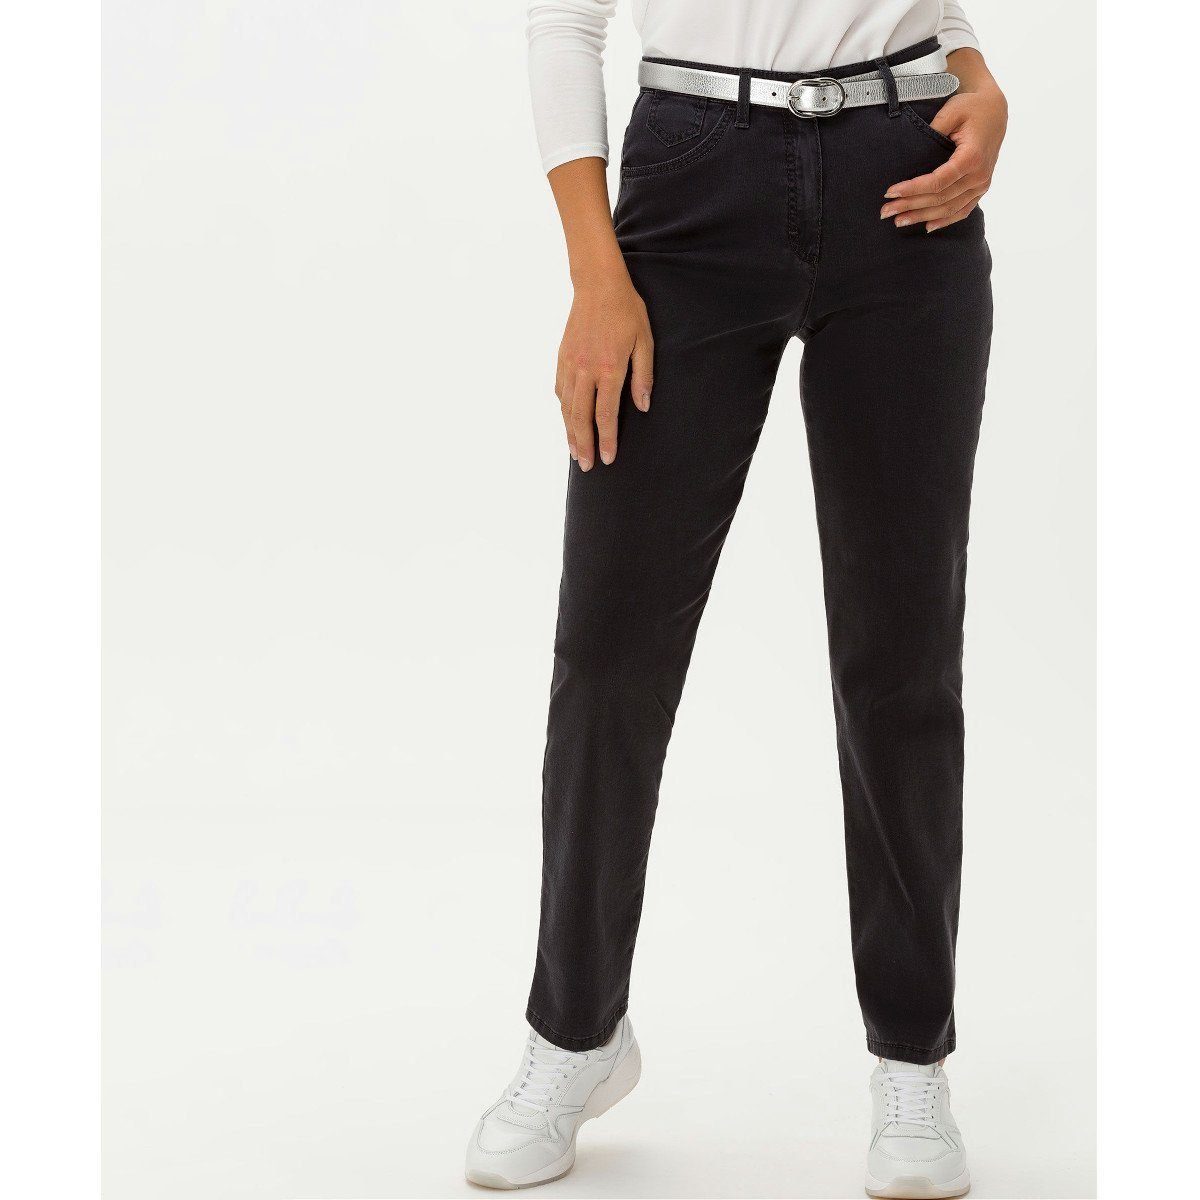 Corry 15-6227 FIT Comfort grau RAPHAELA 5-Pocket-Jeans COMFORT by Plus (08) BRAX Fay